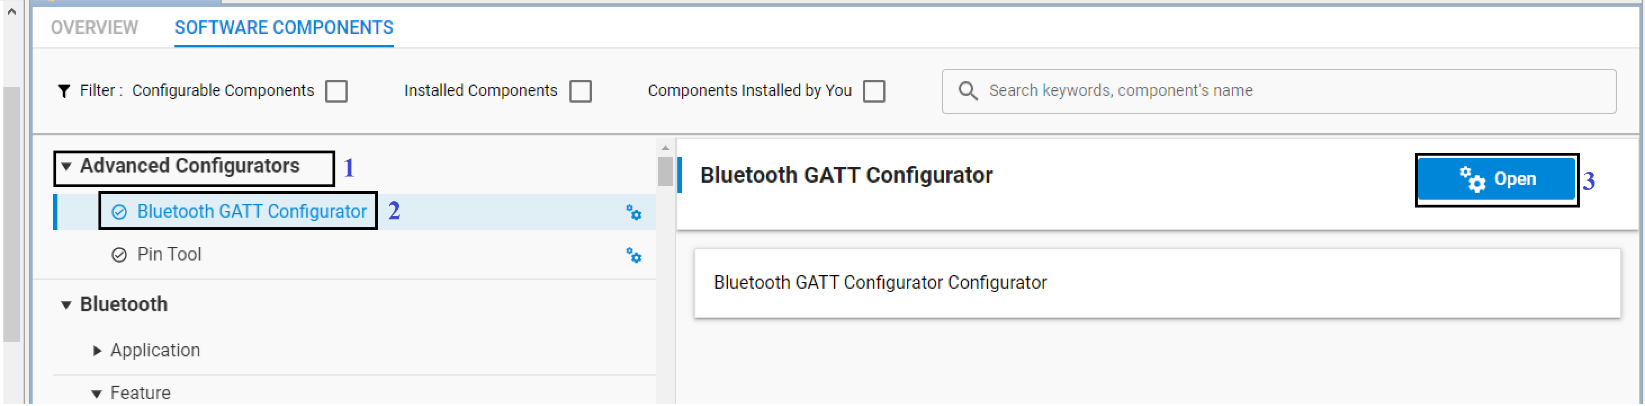 Opening Bluetooth GATT Configurator